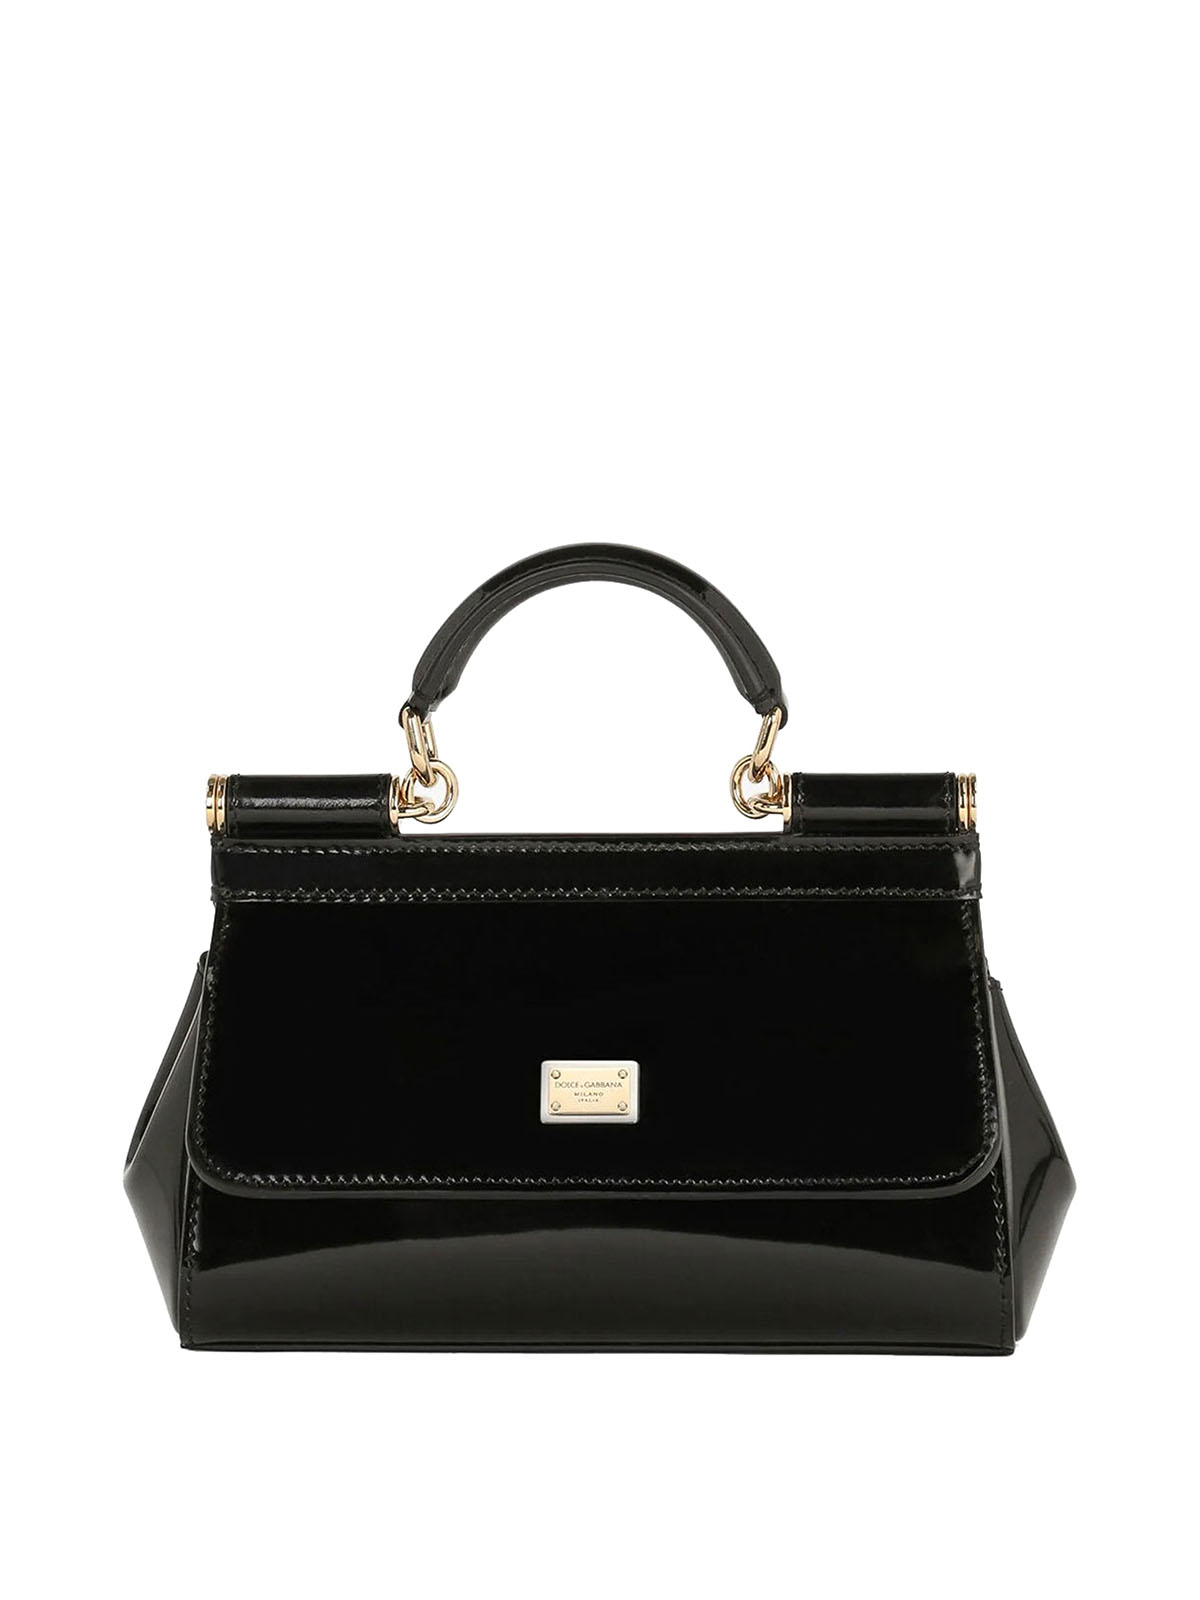 Dolce & Gabbana Leather Tote Bag In Black